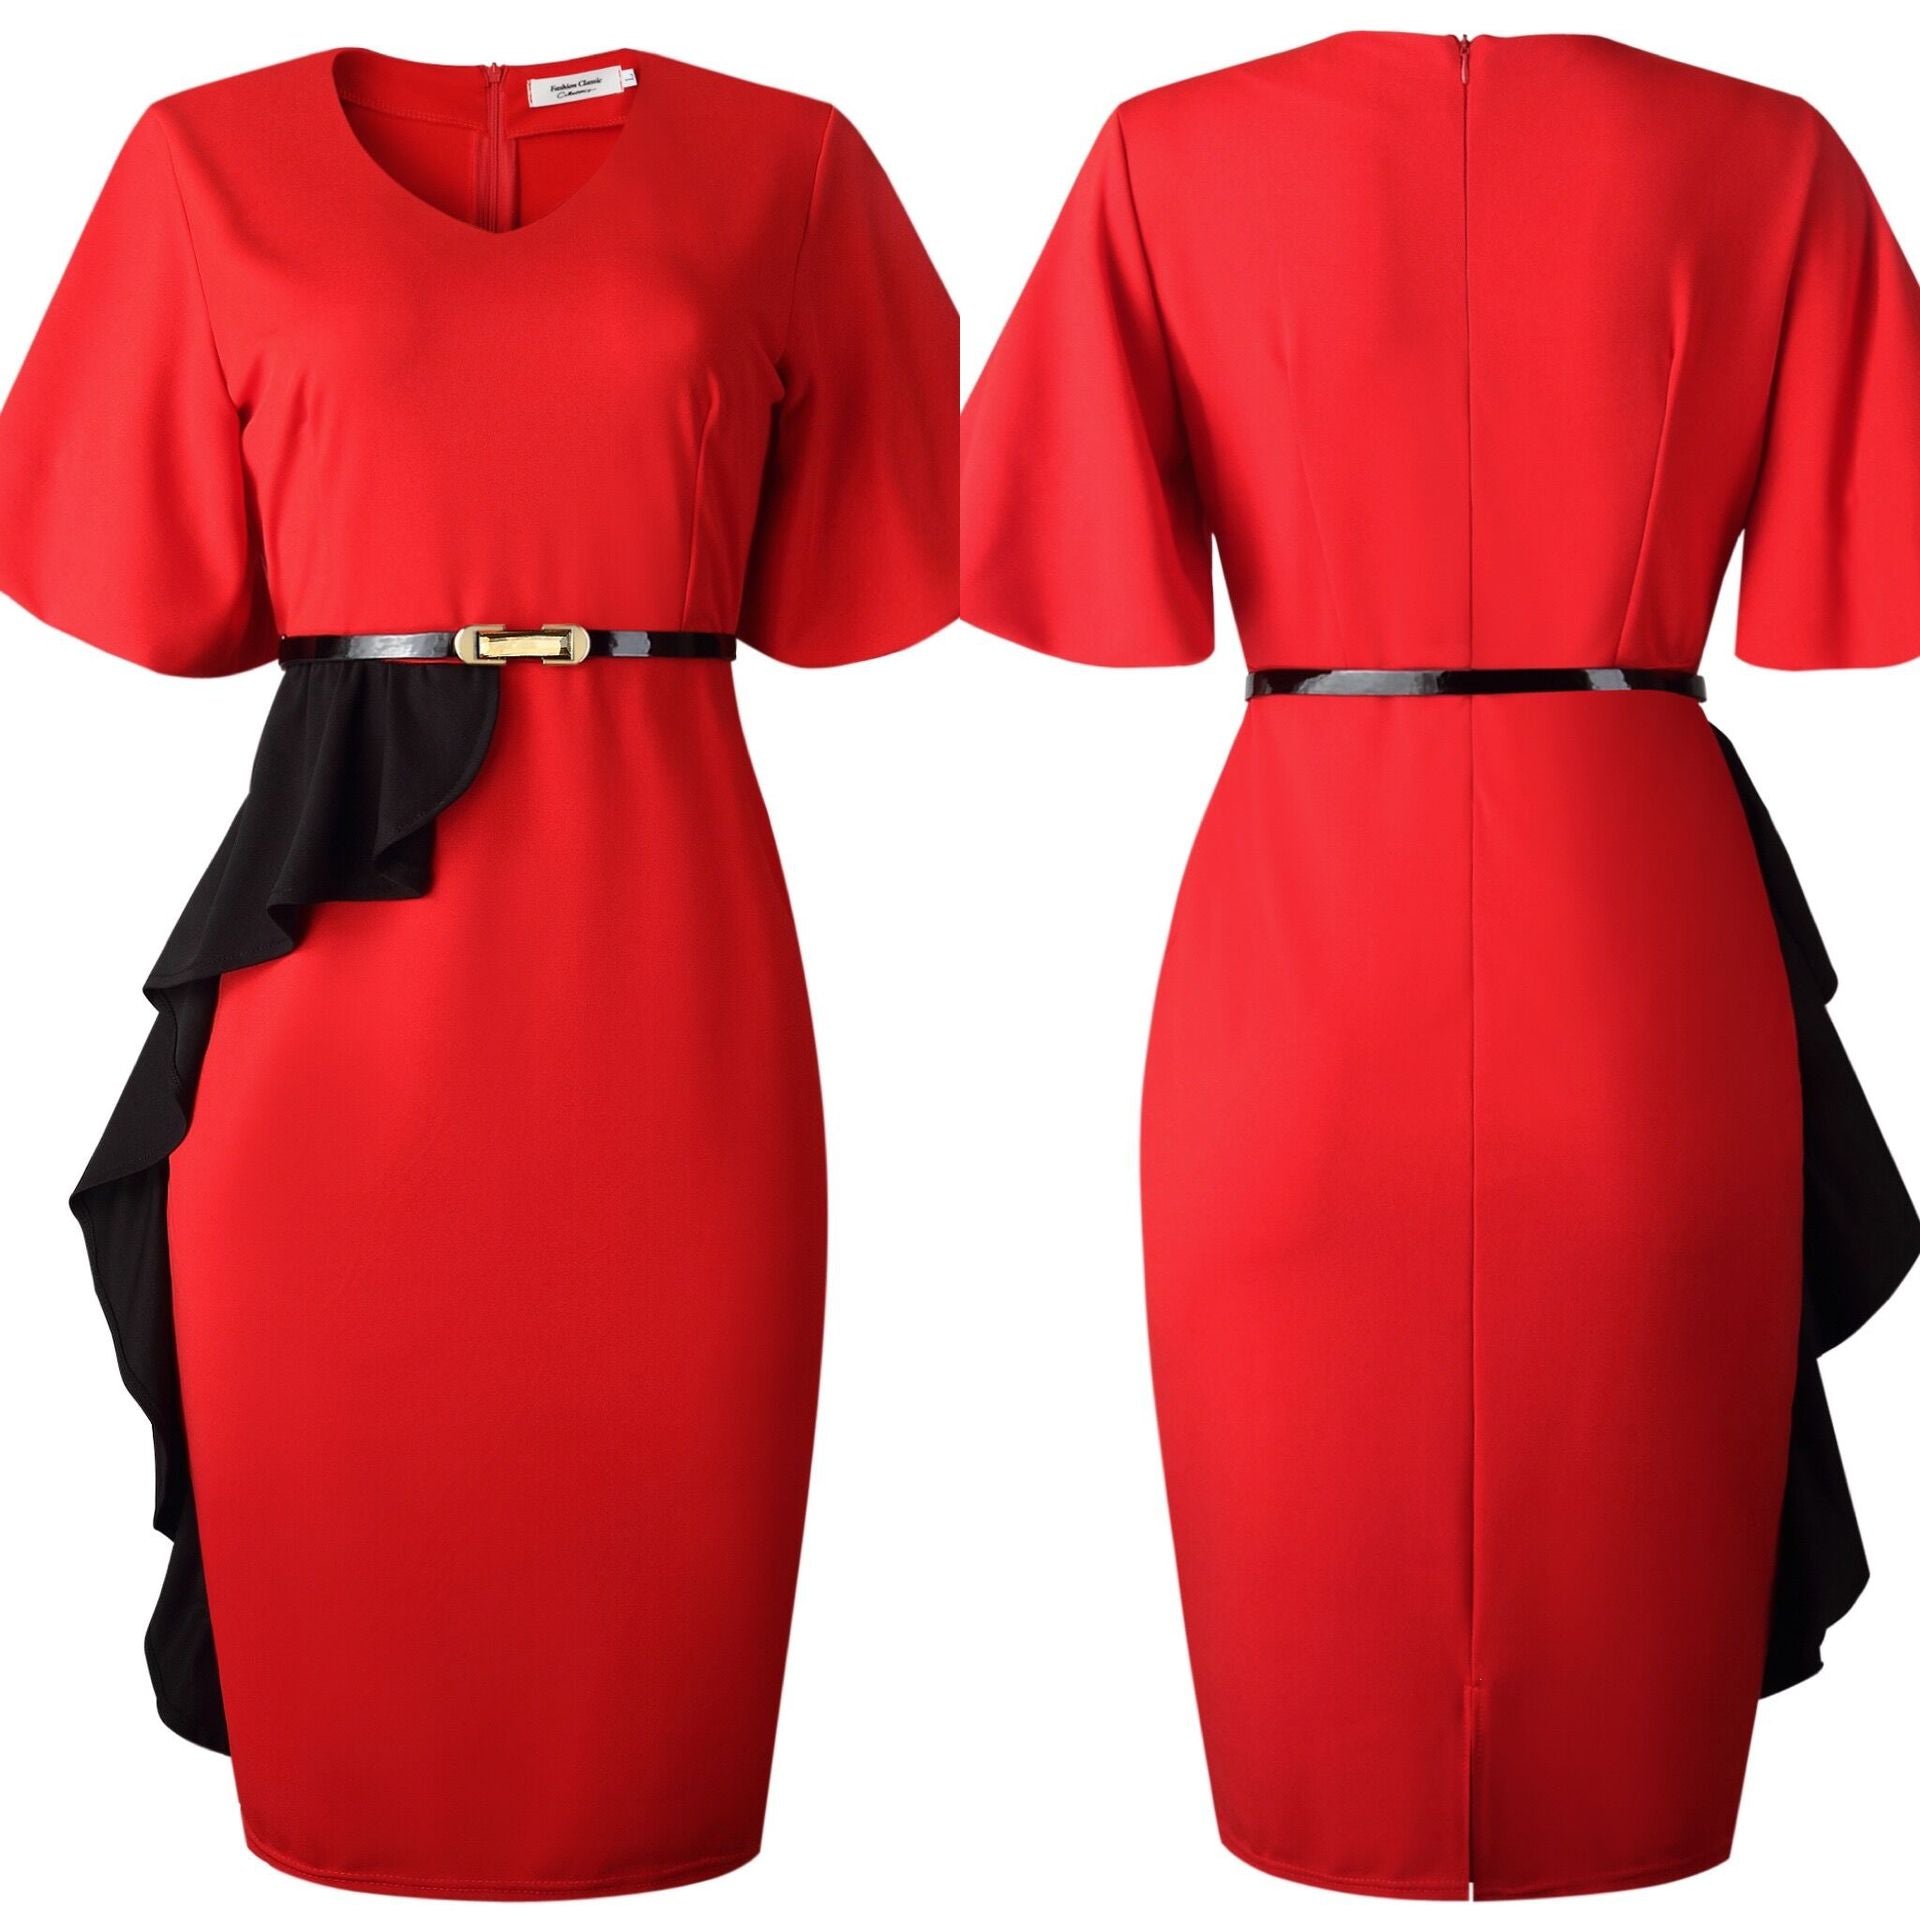 Red V Neck Short Sleeves Bodycon Dresses Elastic with Waist Belt Ruffles Elegant Office Wear